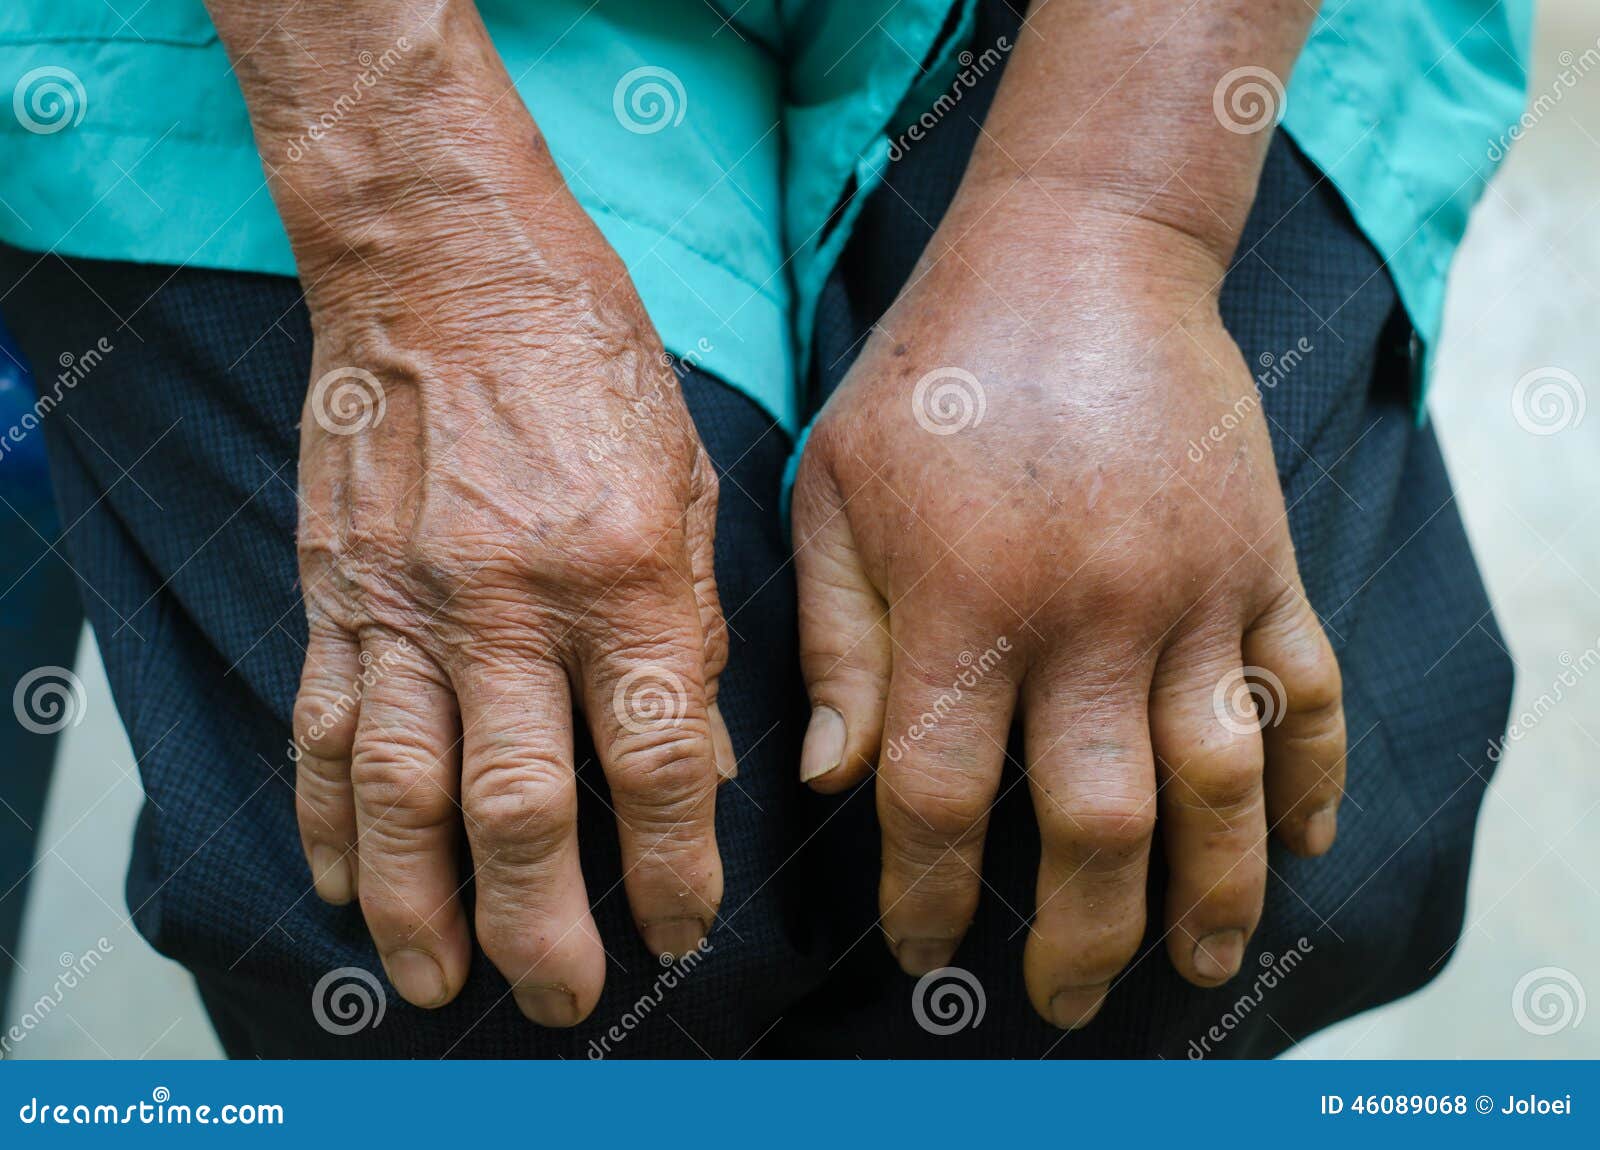 left hand inflammation